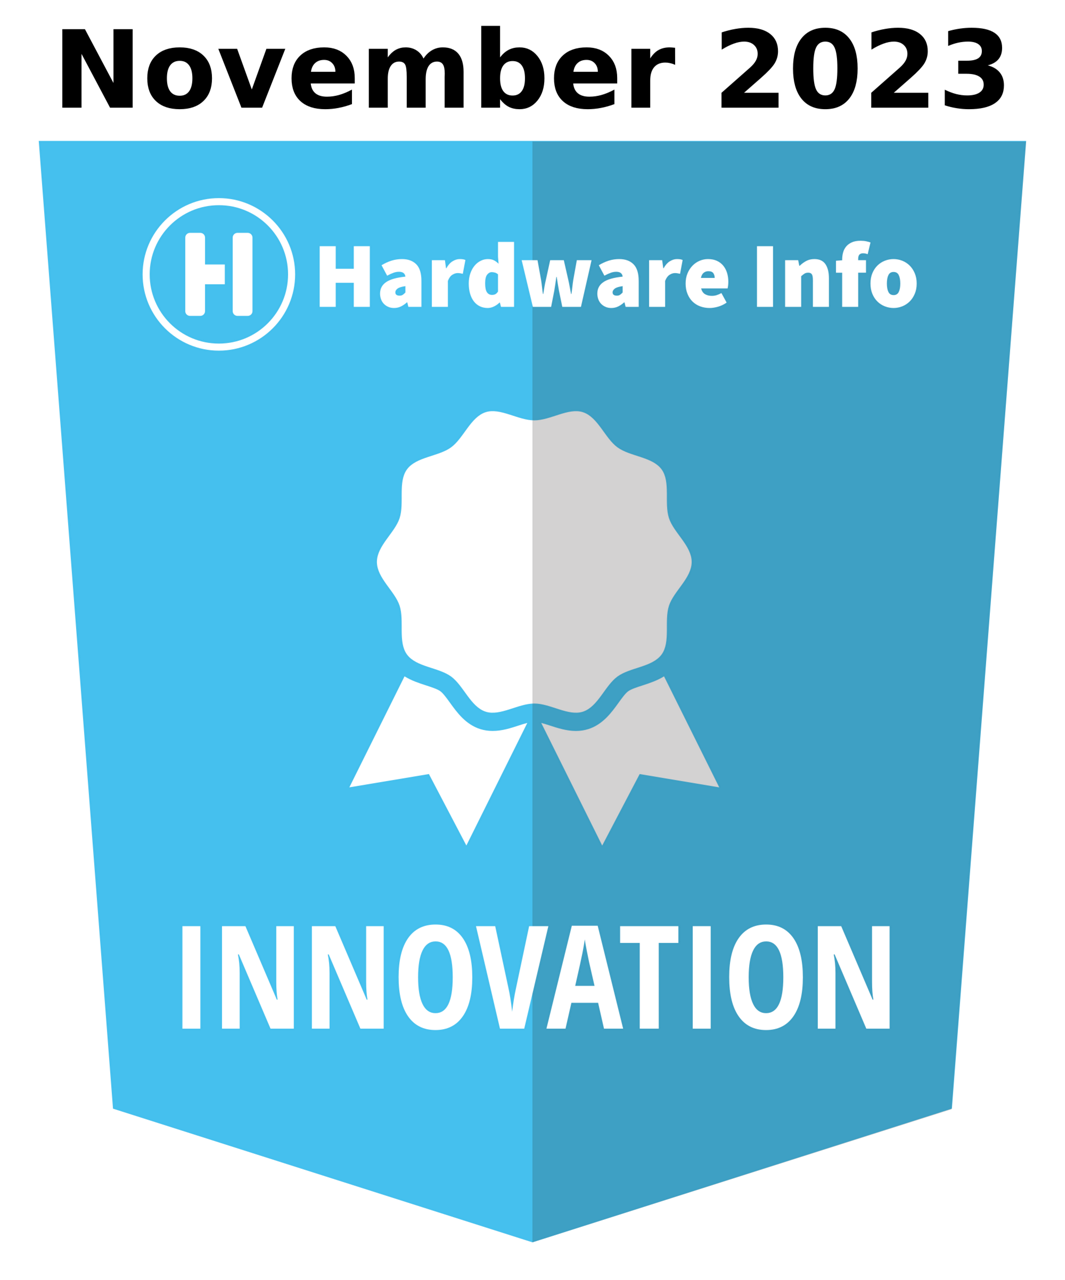 Winnaar van Hardware info Innovation Award